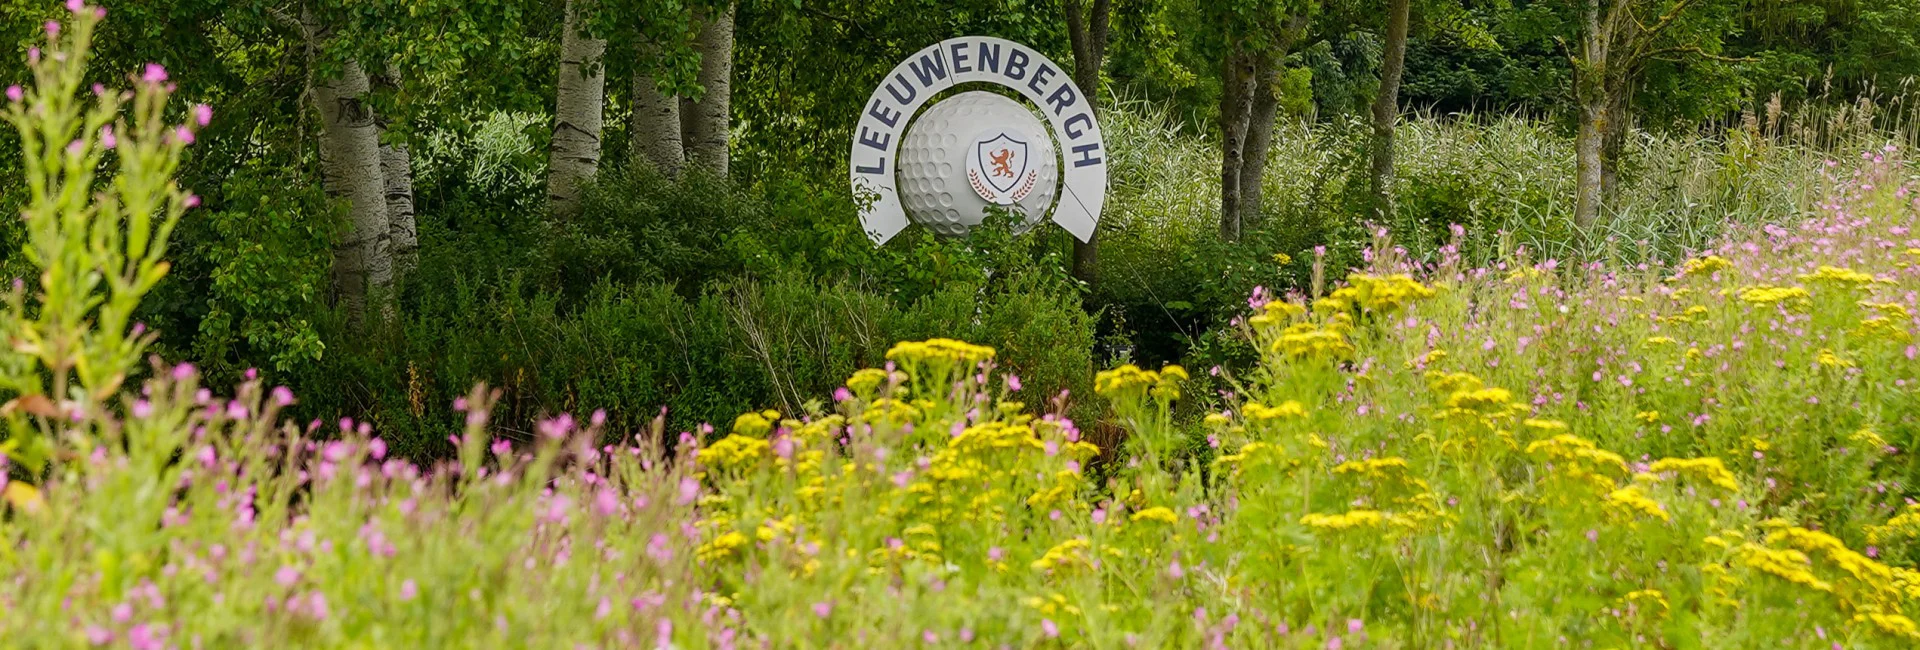 Unieke workshop op Golfpark Leeuwenbergh